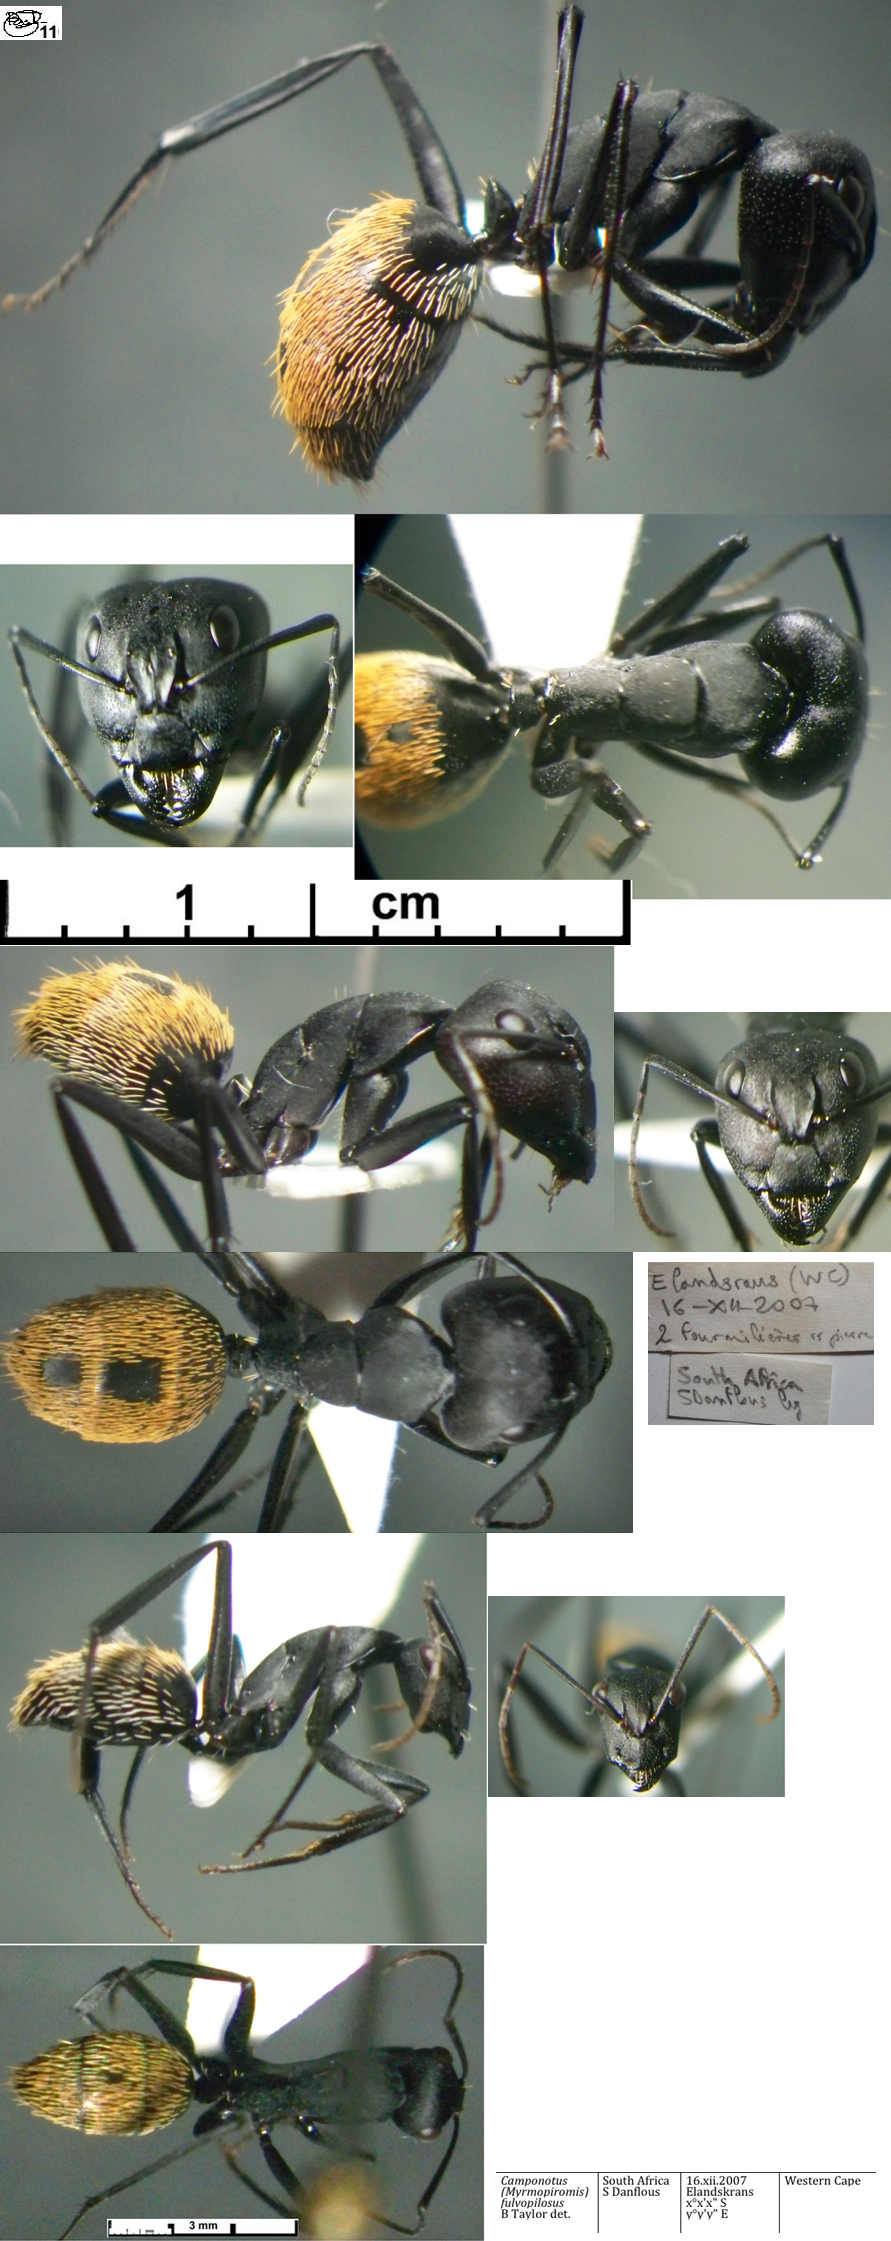 {Camponotus fulvopilosus polymorphism}